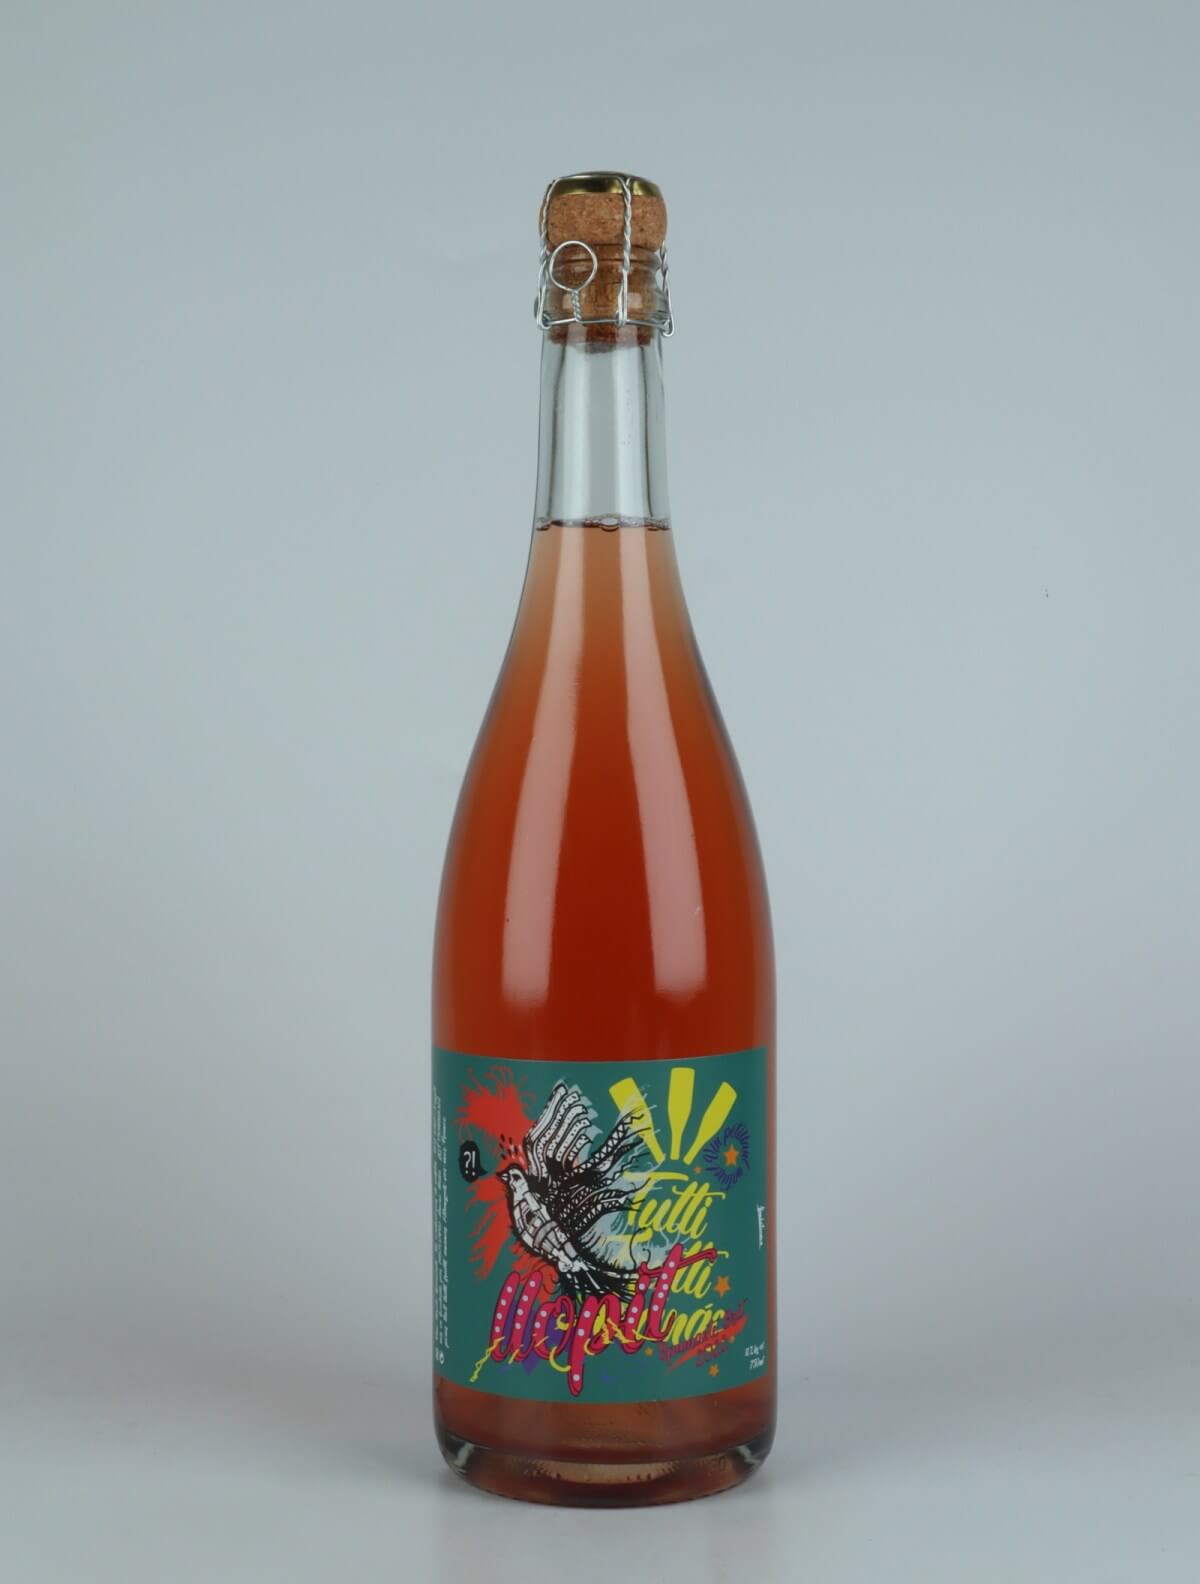 En flaske 2021 Llopit Mousserende fra Tutti Frutti Ananas, Rousillon i Frankrig